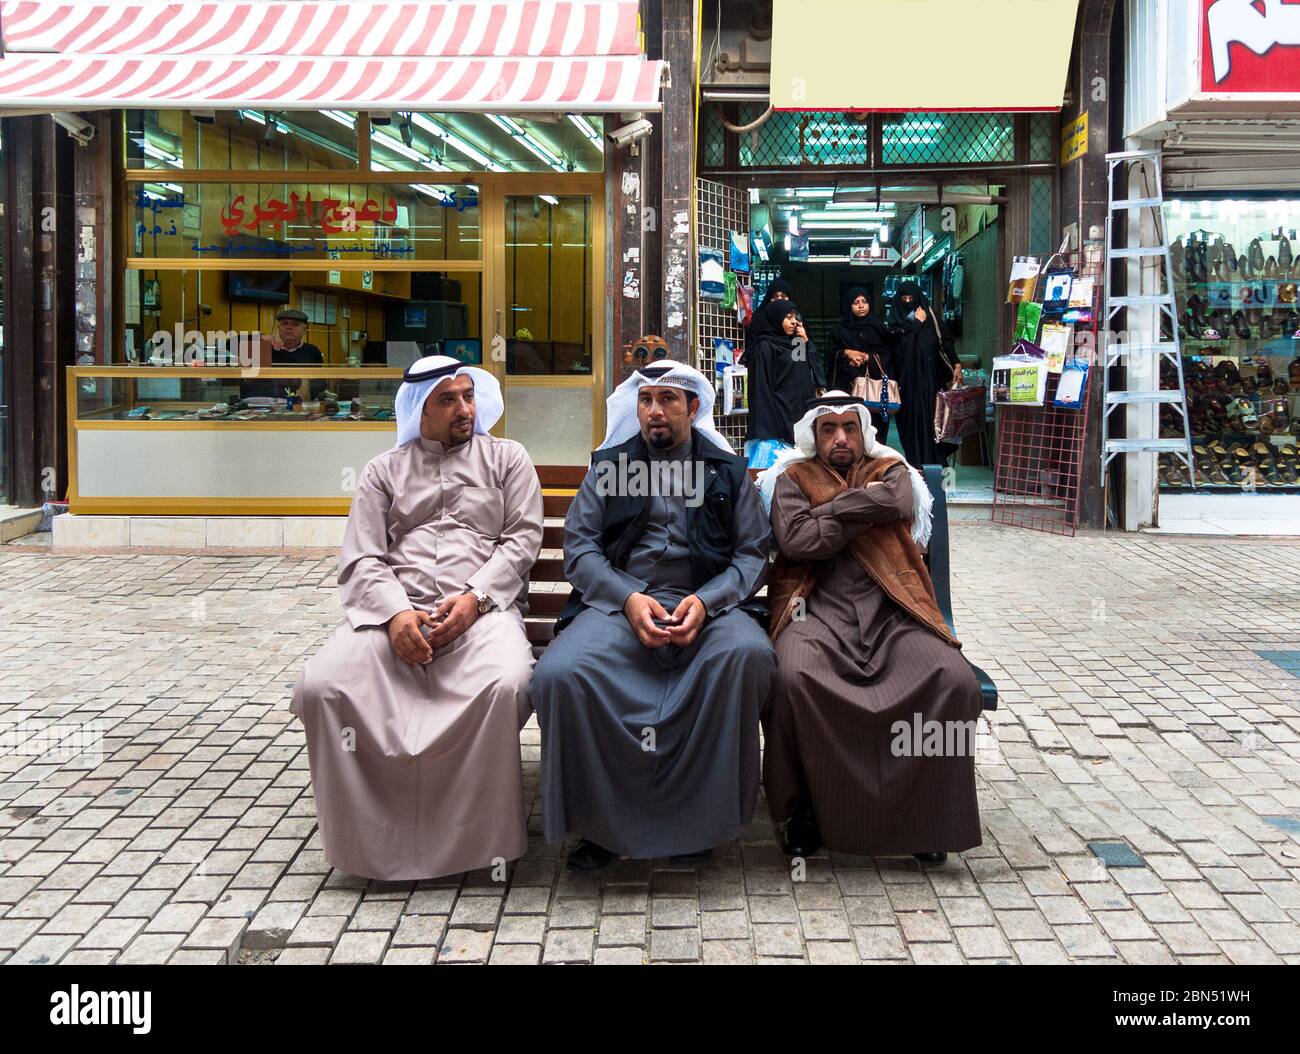 Kuwait città, Kuwait: Tre uomini arabi seduti nei dintorni in abiti tradizionali Foto Stock